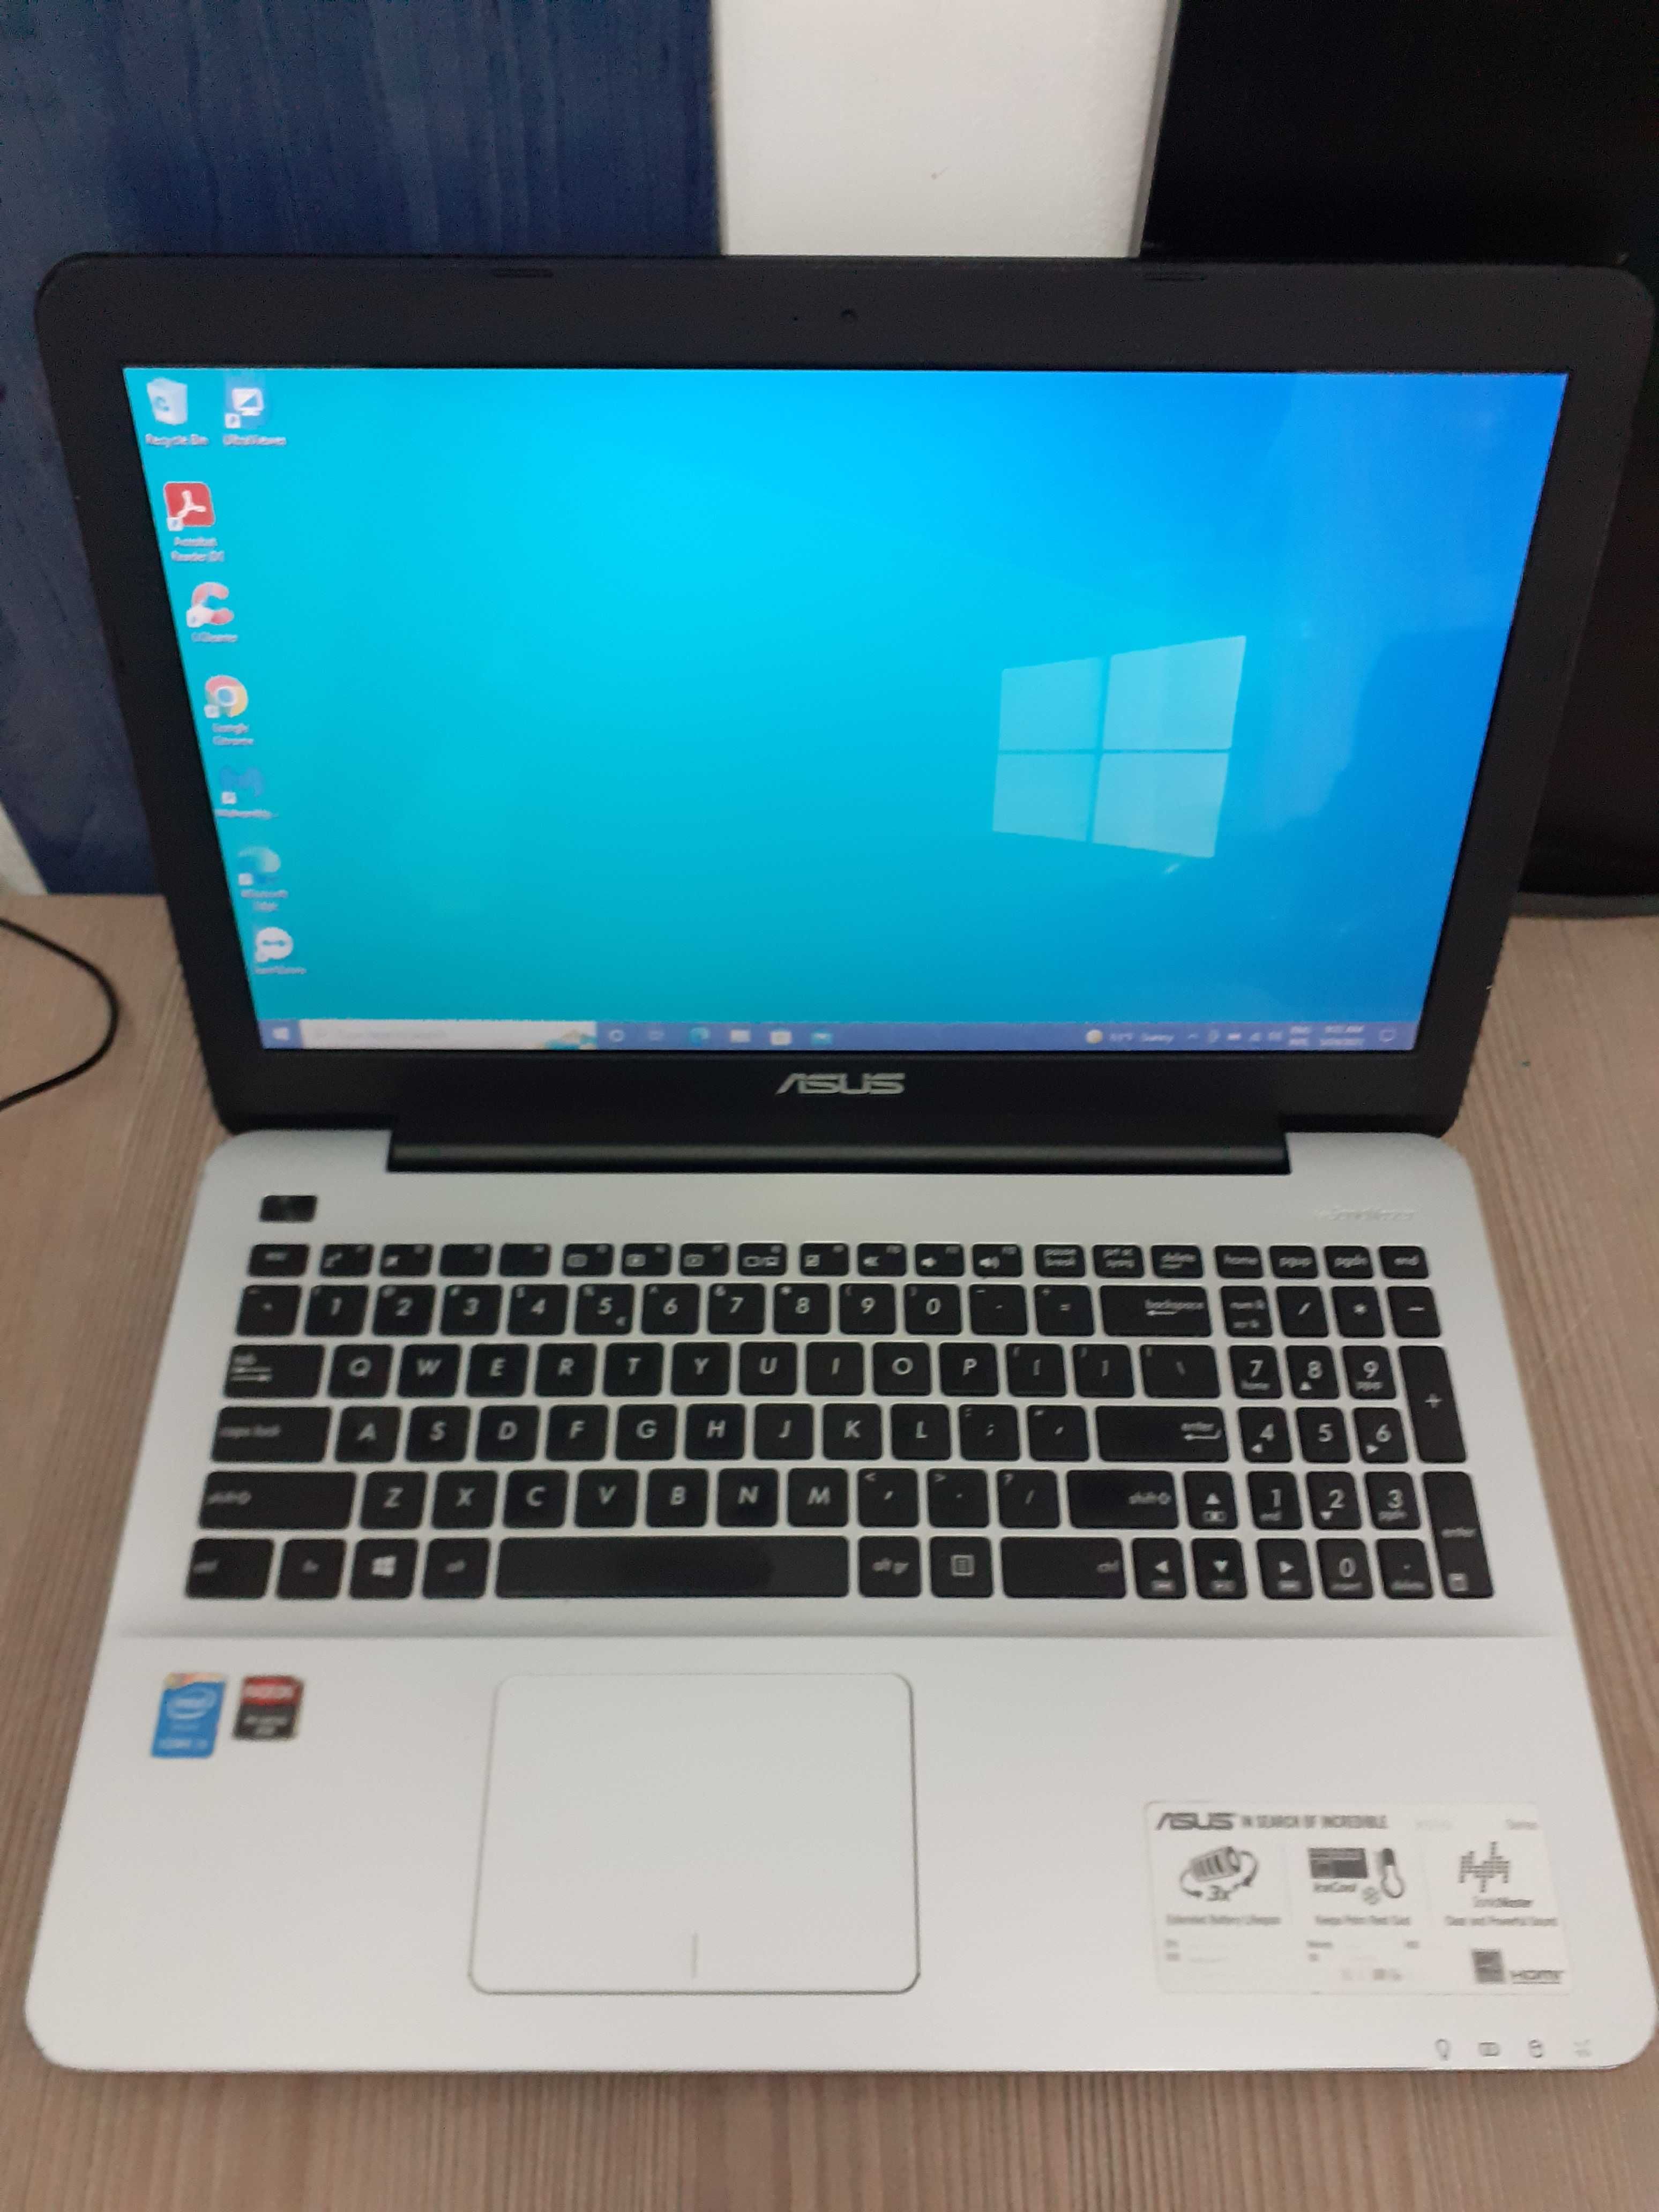 Laptopuri Asus X555, X541, X540 vand sau dezmembrez